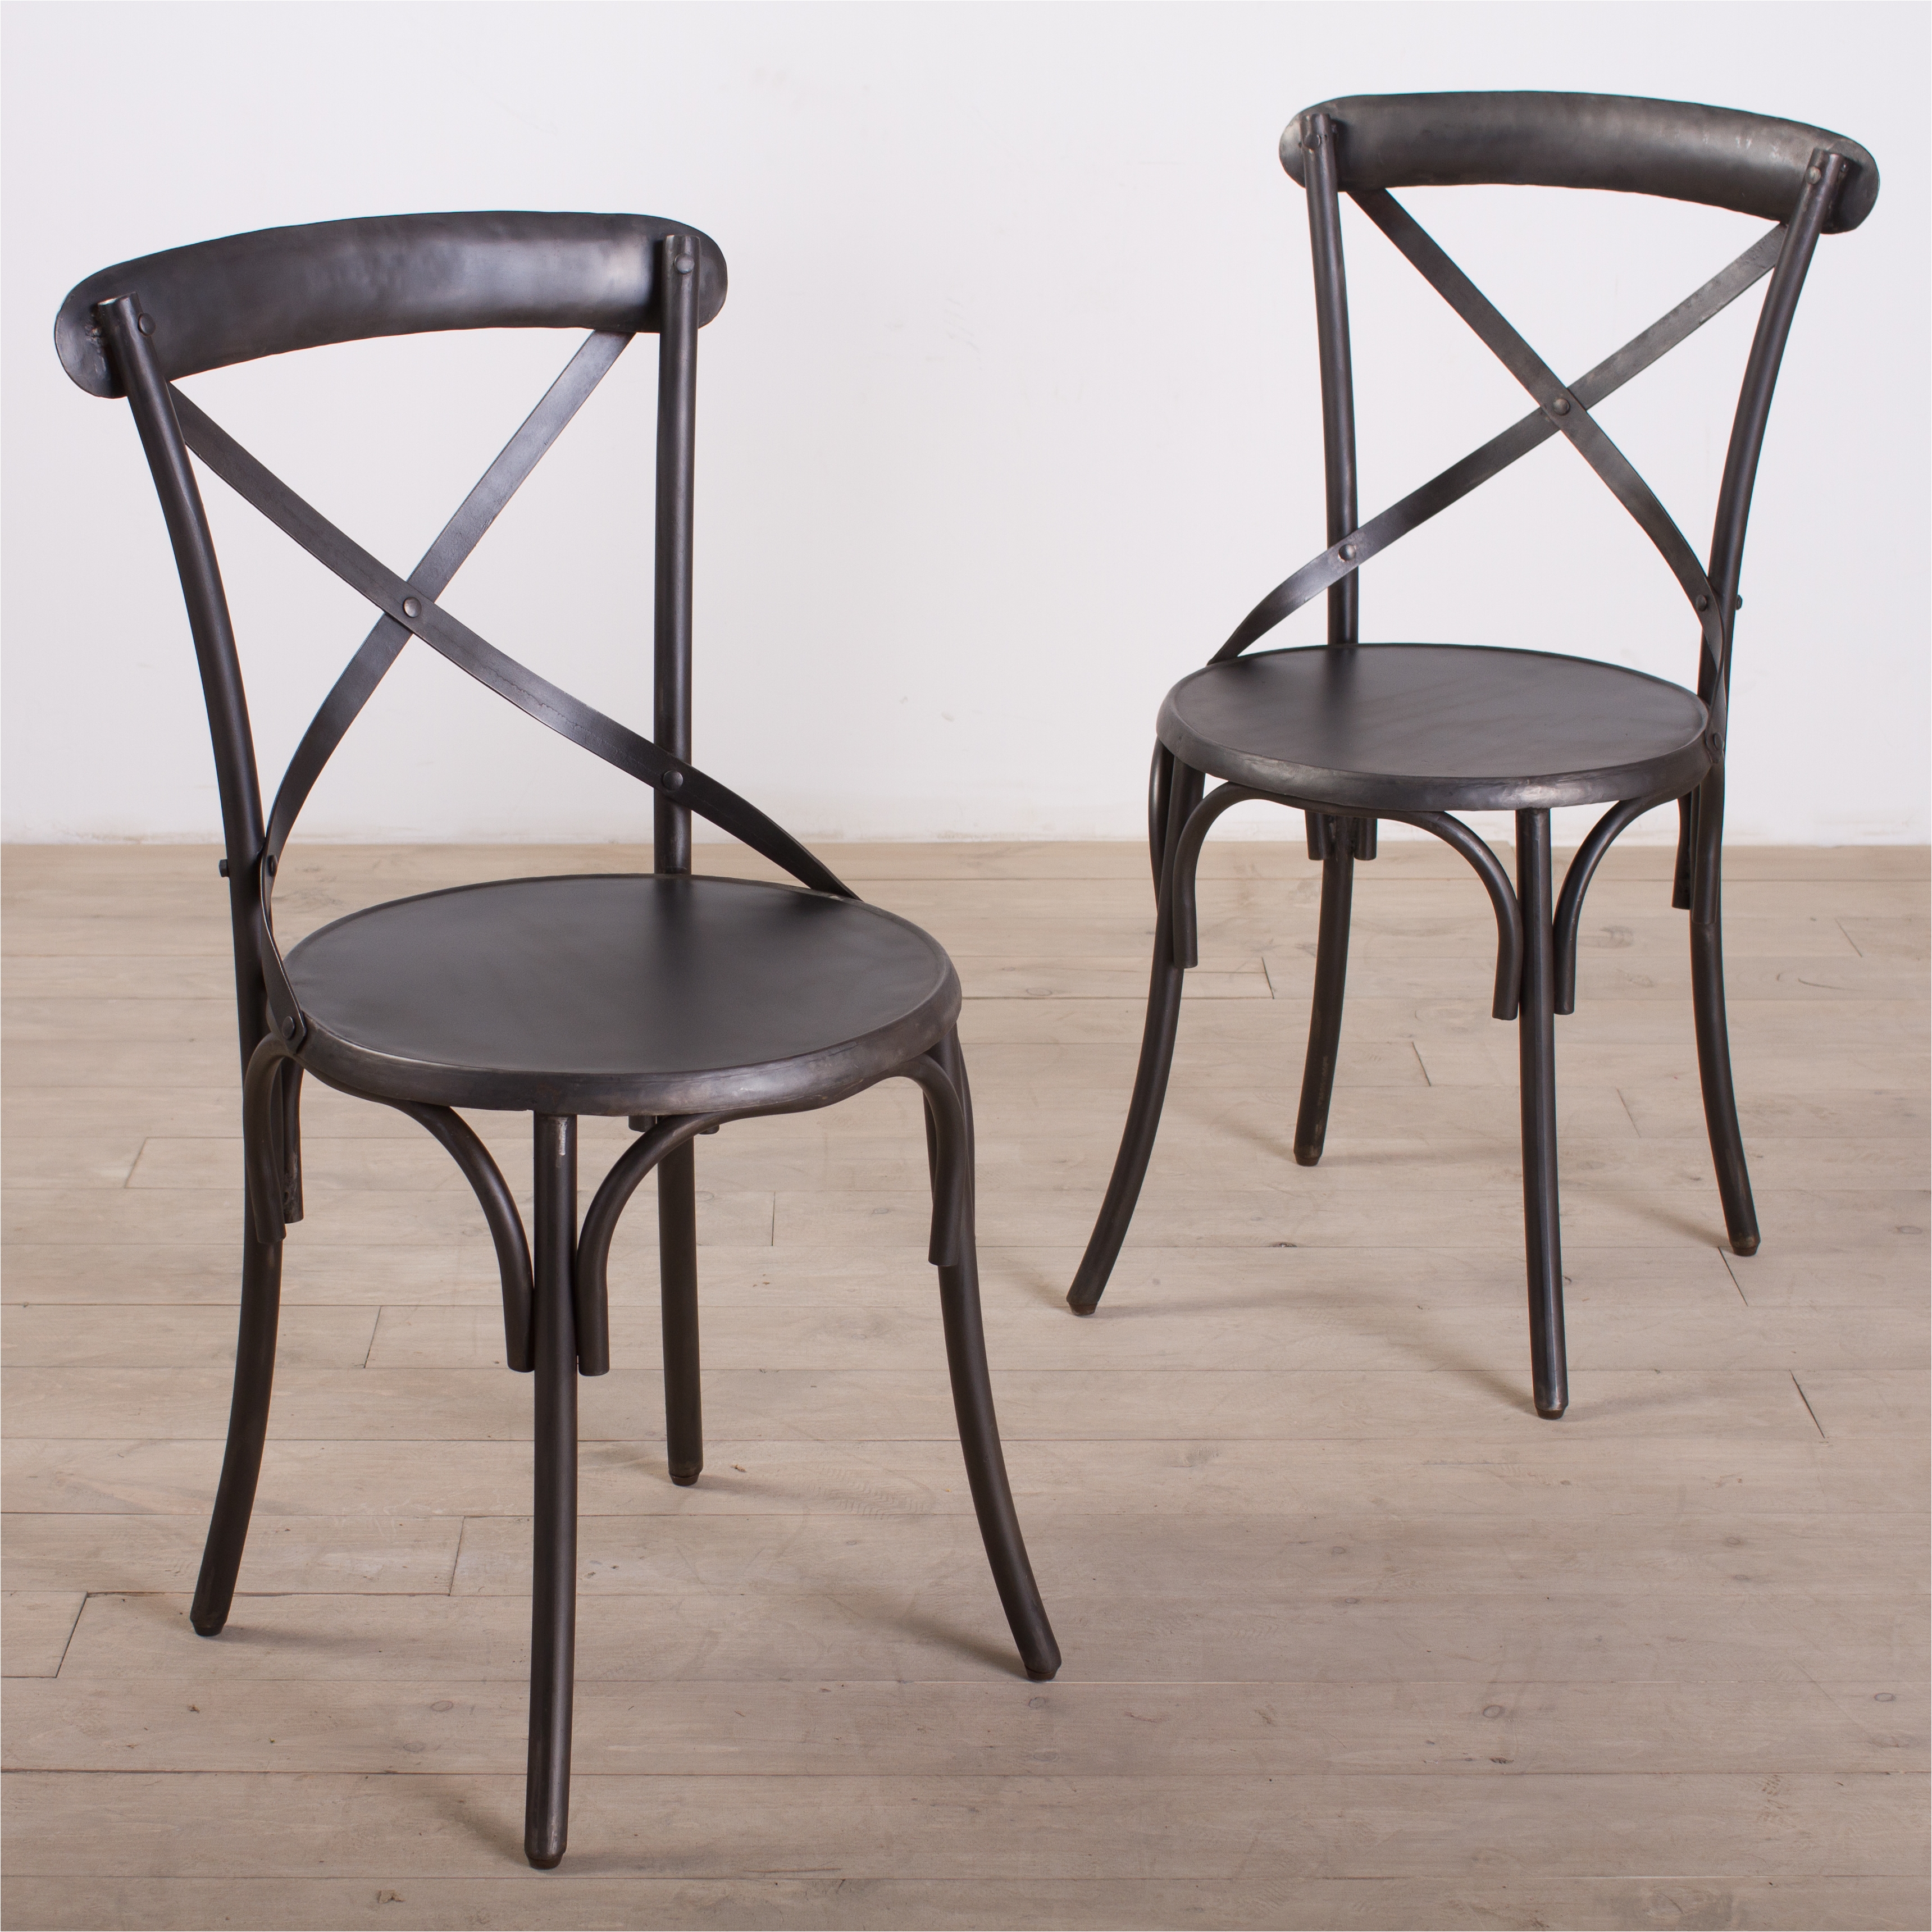 Rustic Metal Dining Chairs Elegant Design Of Rustic Metal Dining Chairs Best Home Plans and